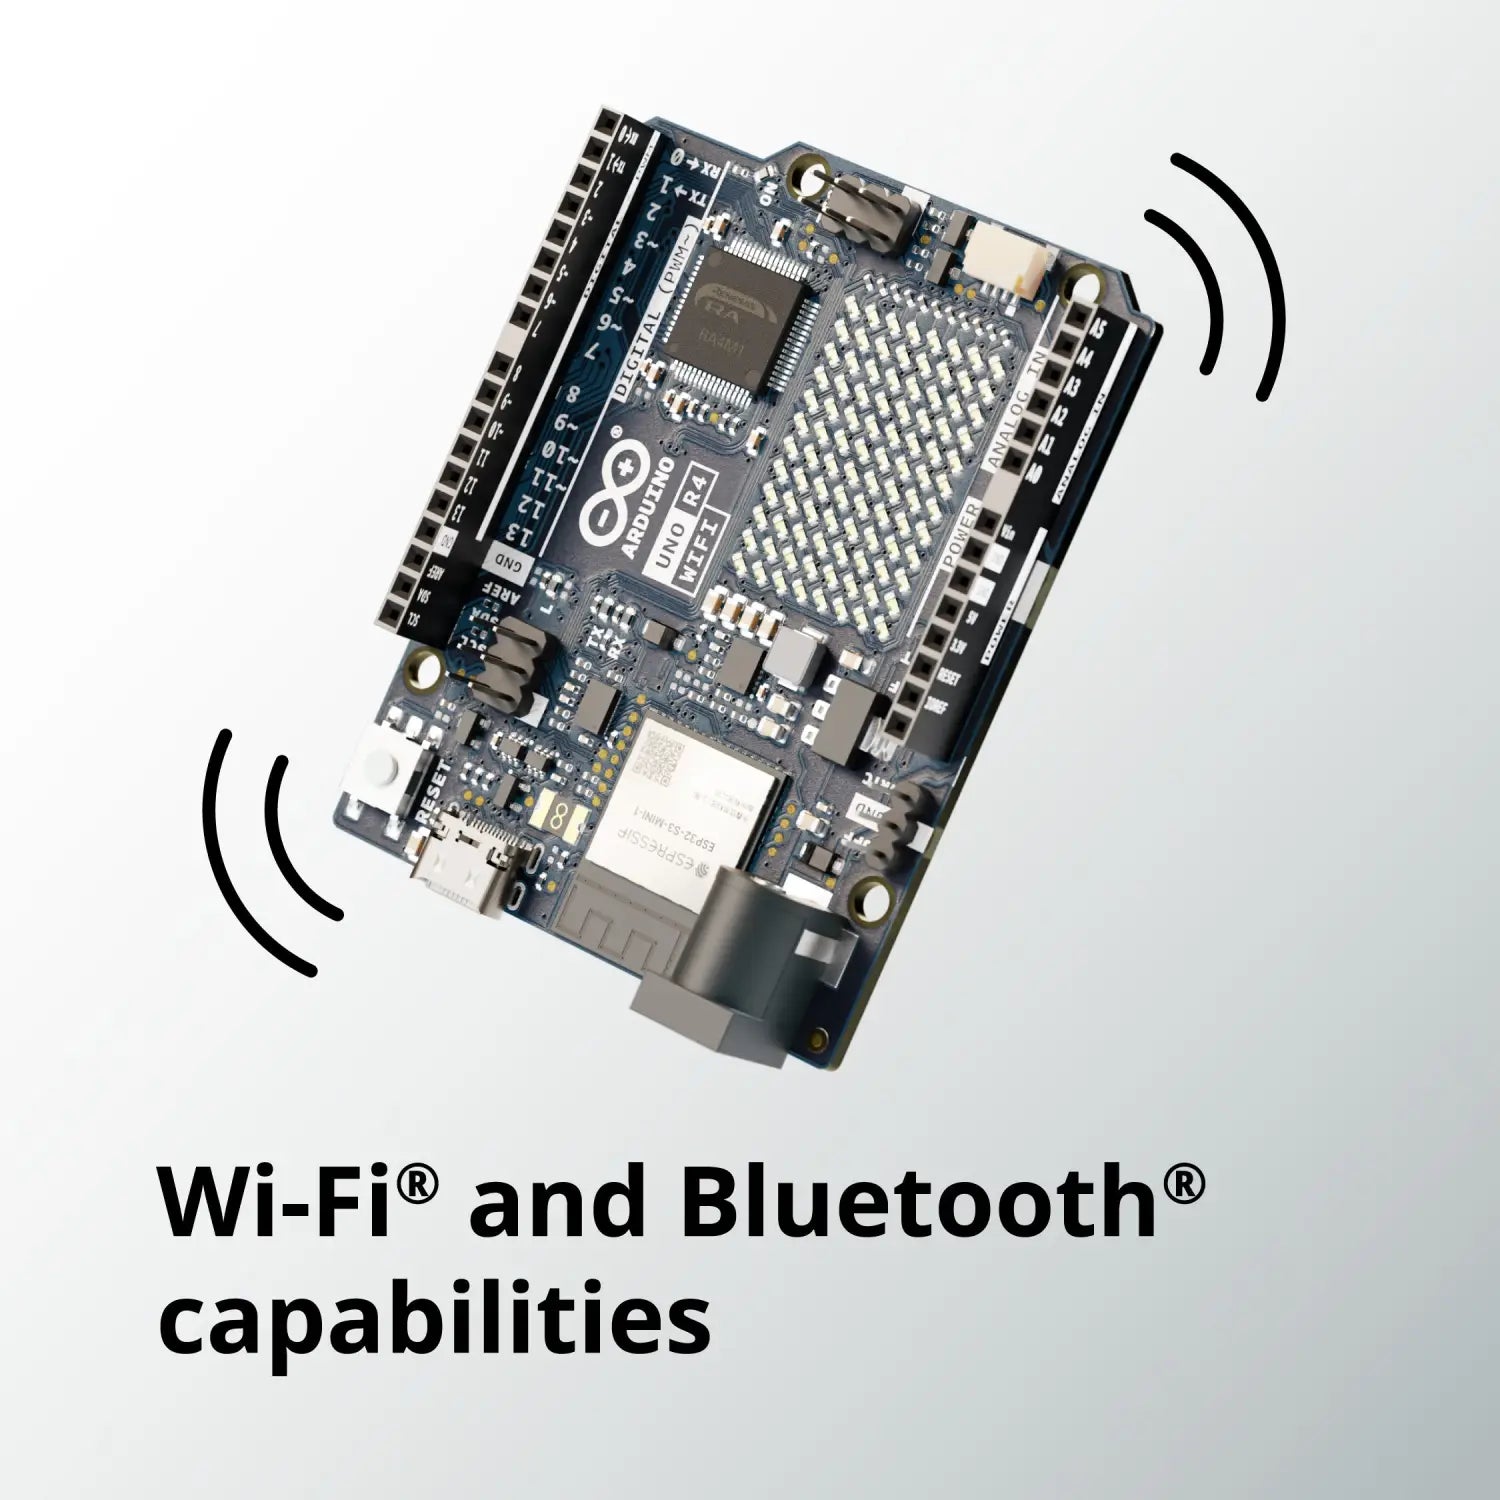 Arduino UNO R4 WiFi [ABX00087] - Renesas RA4M1 / ESP32-S3 - Wi-Fi,  Bluetooth, USB-C, CAN, DAC, OP AMP, Qwiic Connector, 12x8 LED Matrix